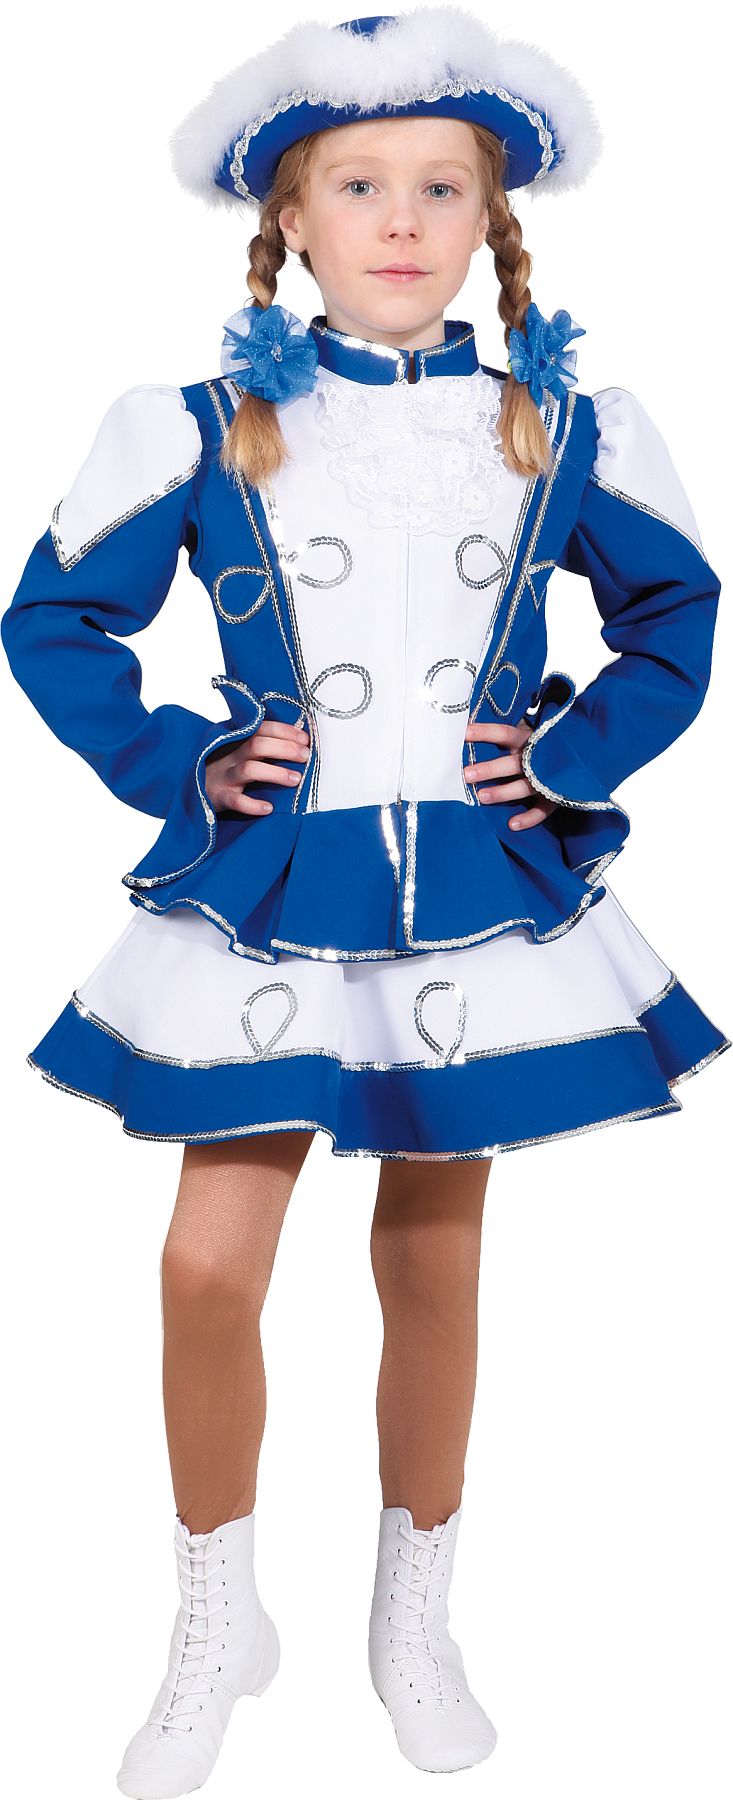 Sparkl costume, blue-white with silver trim